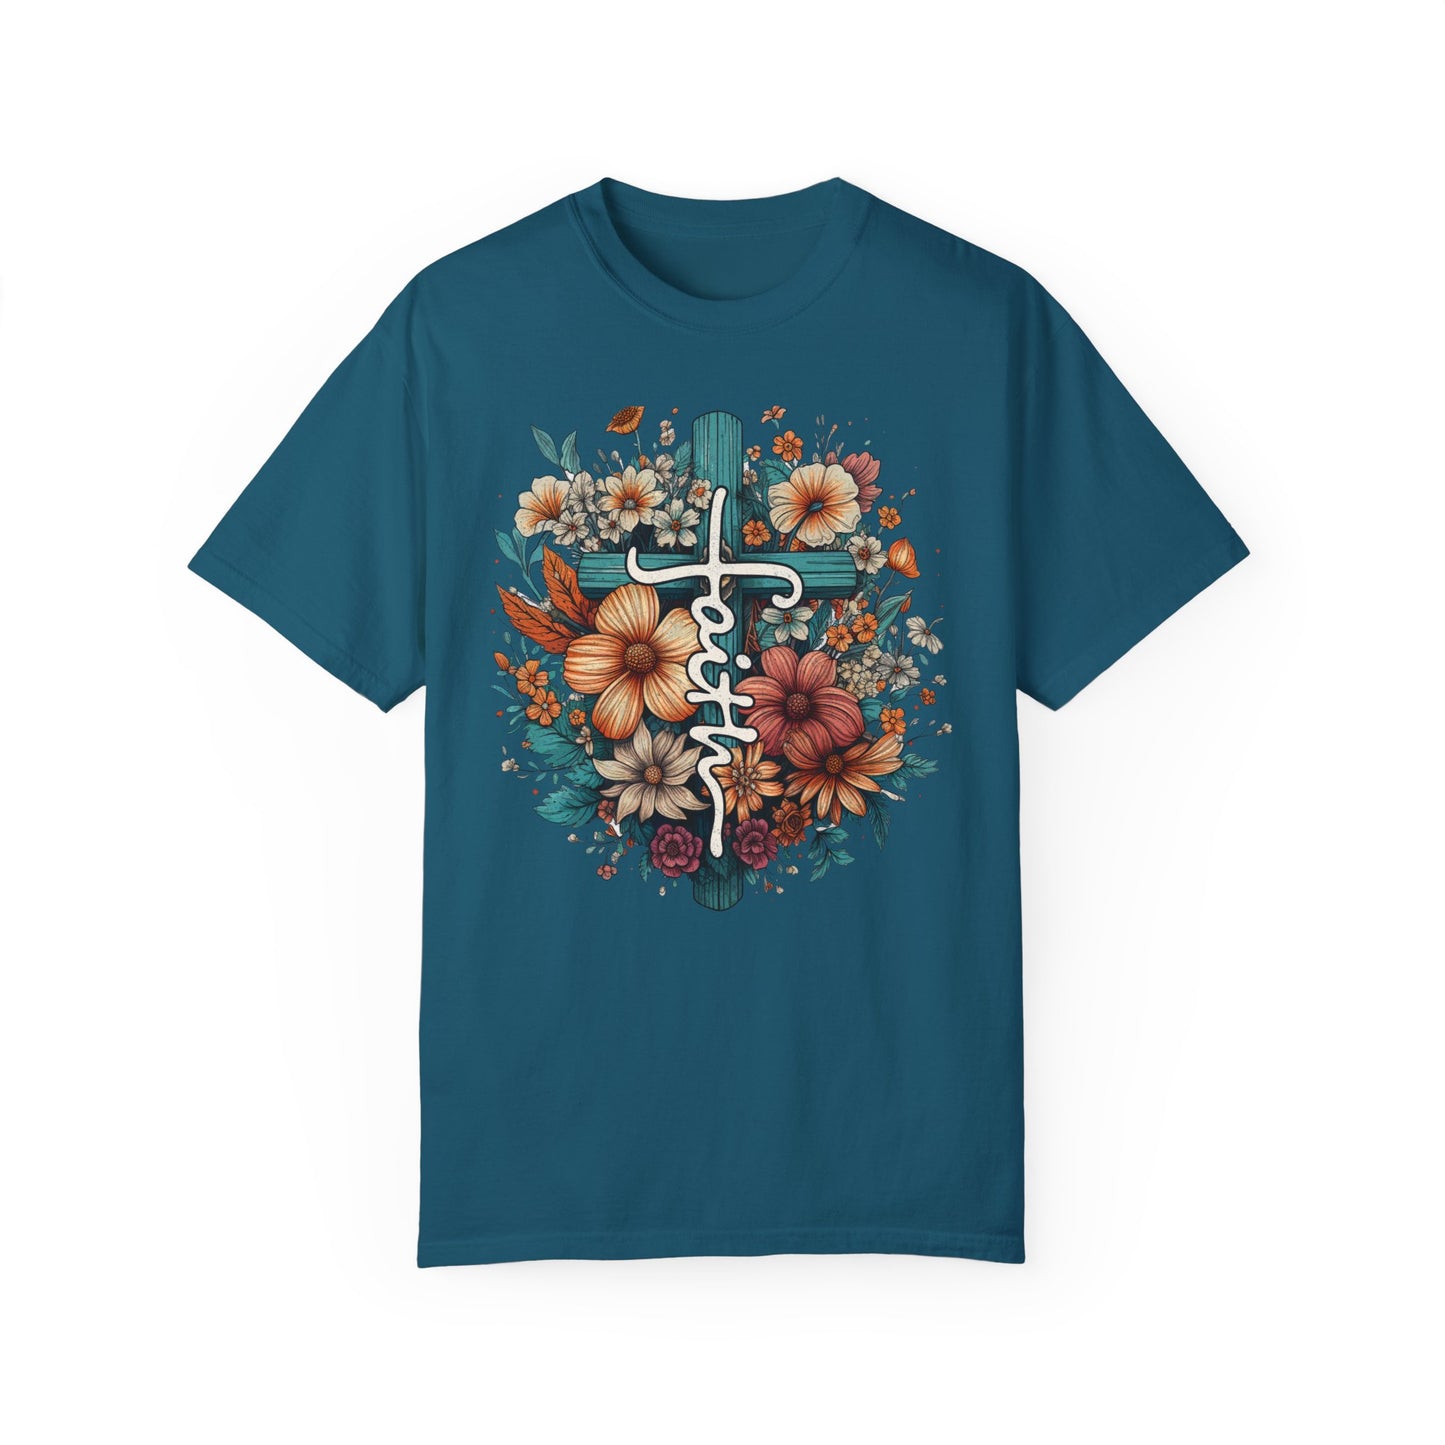 Faith With Cross T-Shirt Floral T-Shirt Religious Faith Shirt Inspirational T-Shirt Gifts For Her Gifts For Mom Cross T-Shirt Inspiring